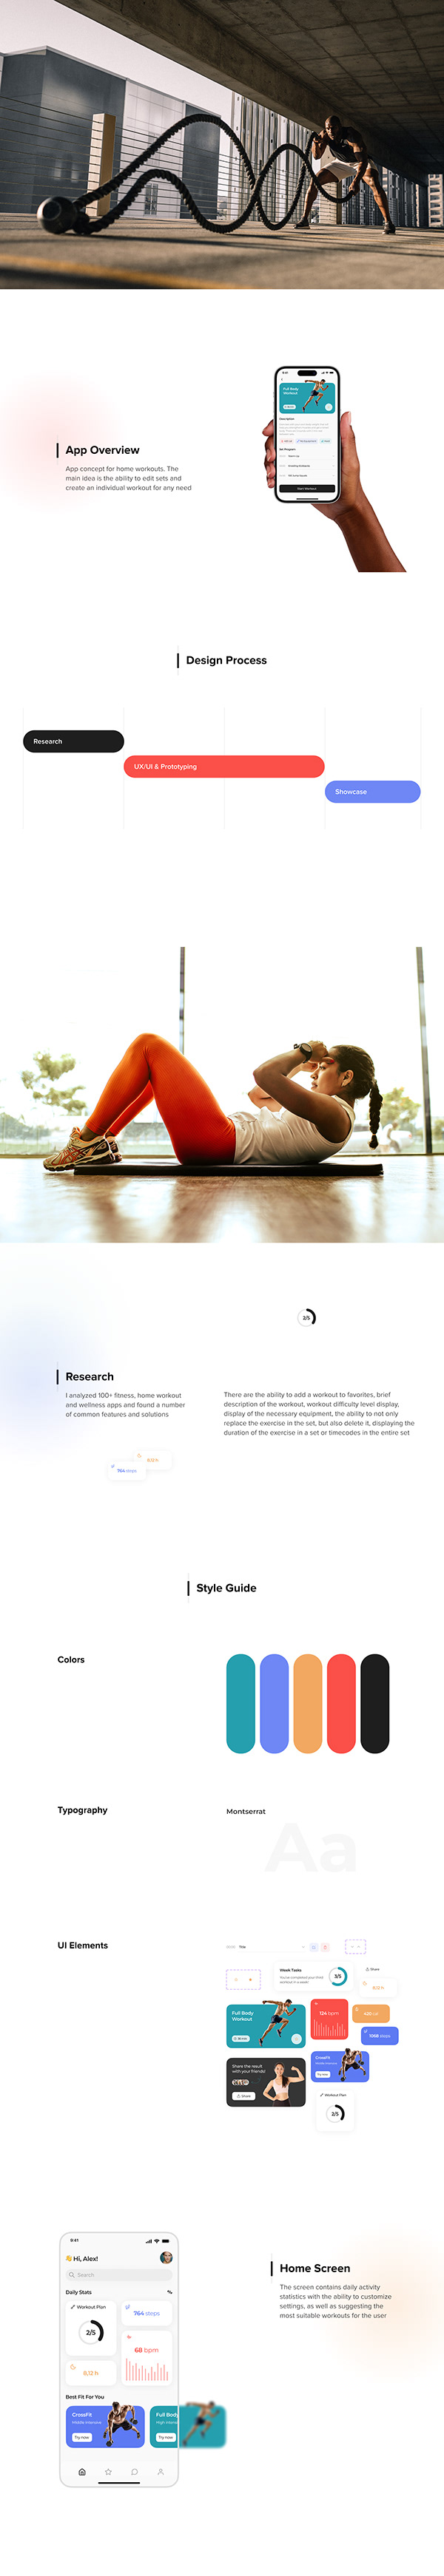 Fitness App | Design concept